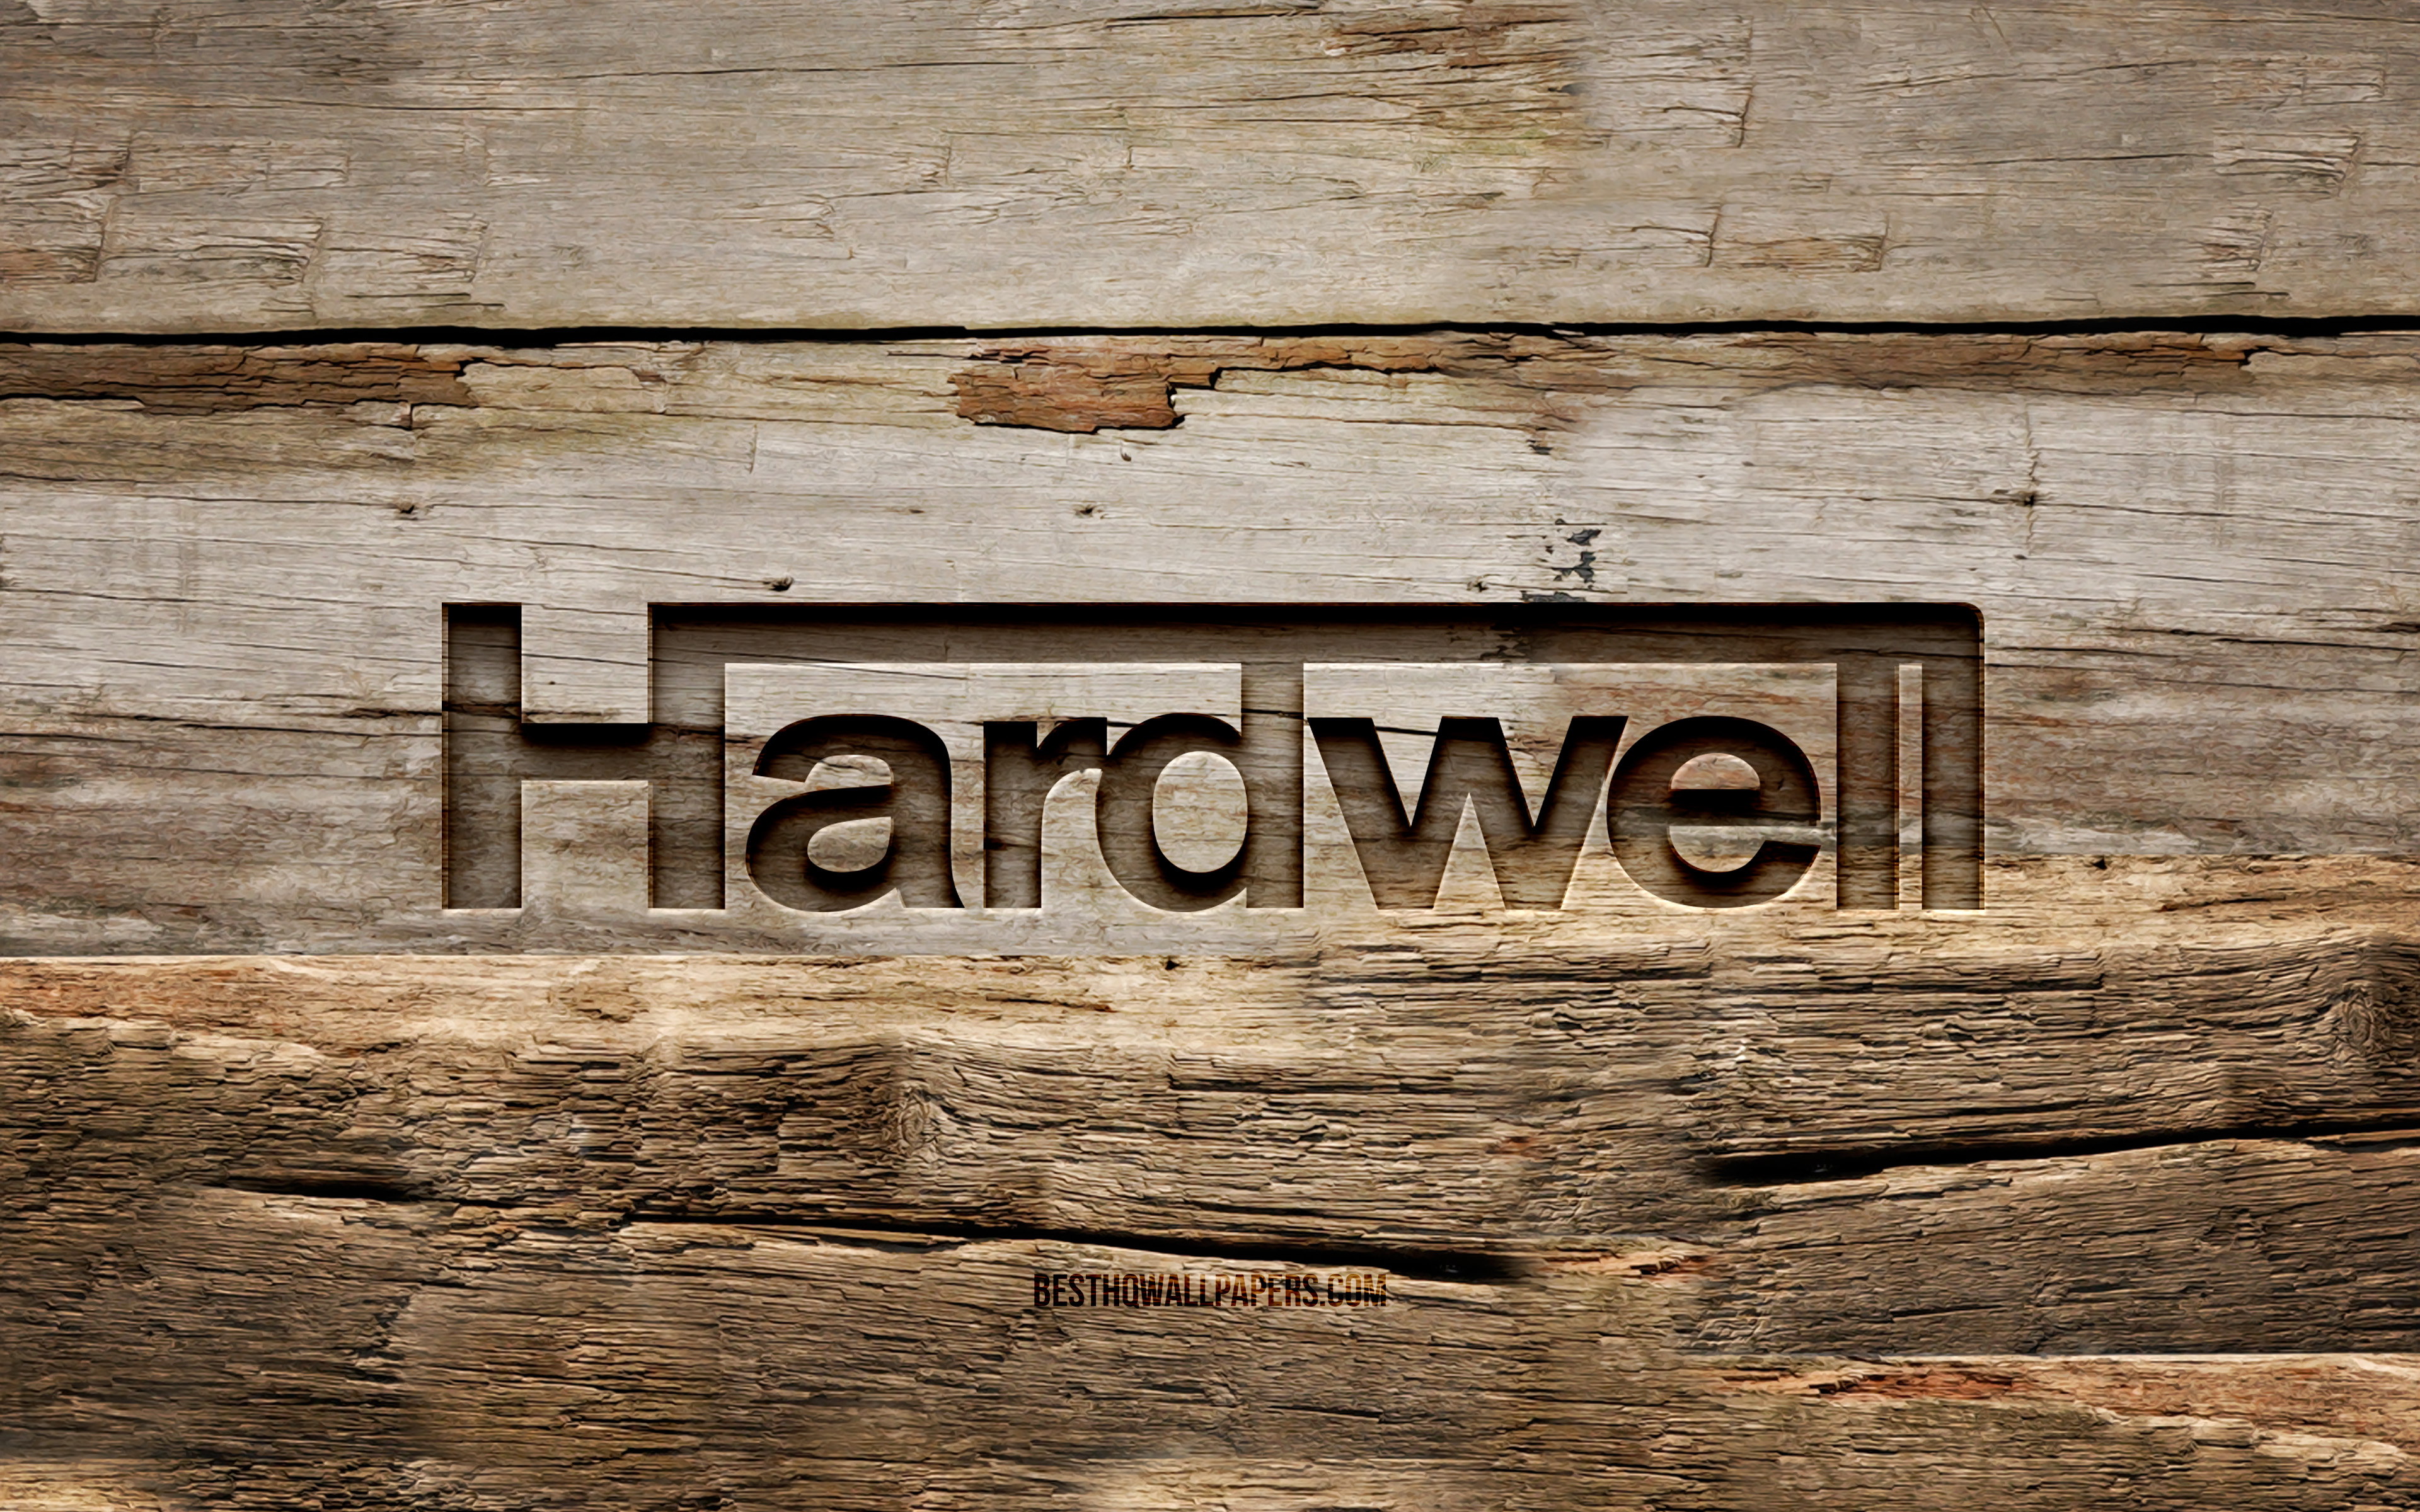 Download wallpaper Hardwell wooden